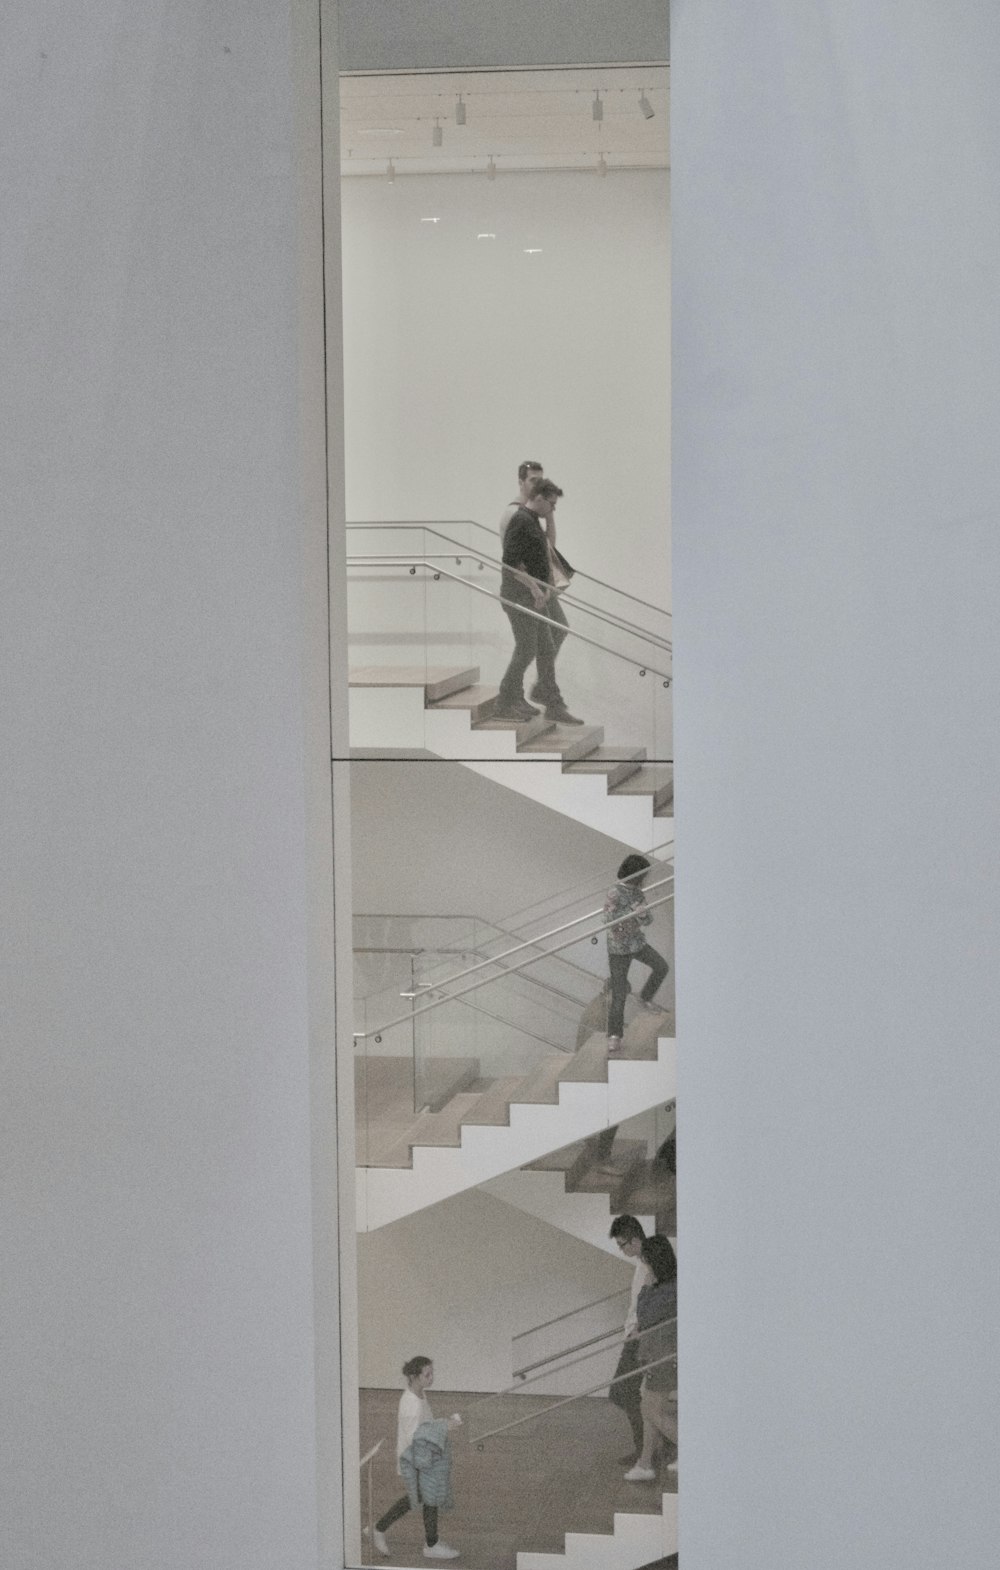 people walking on stairs inside building